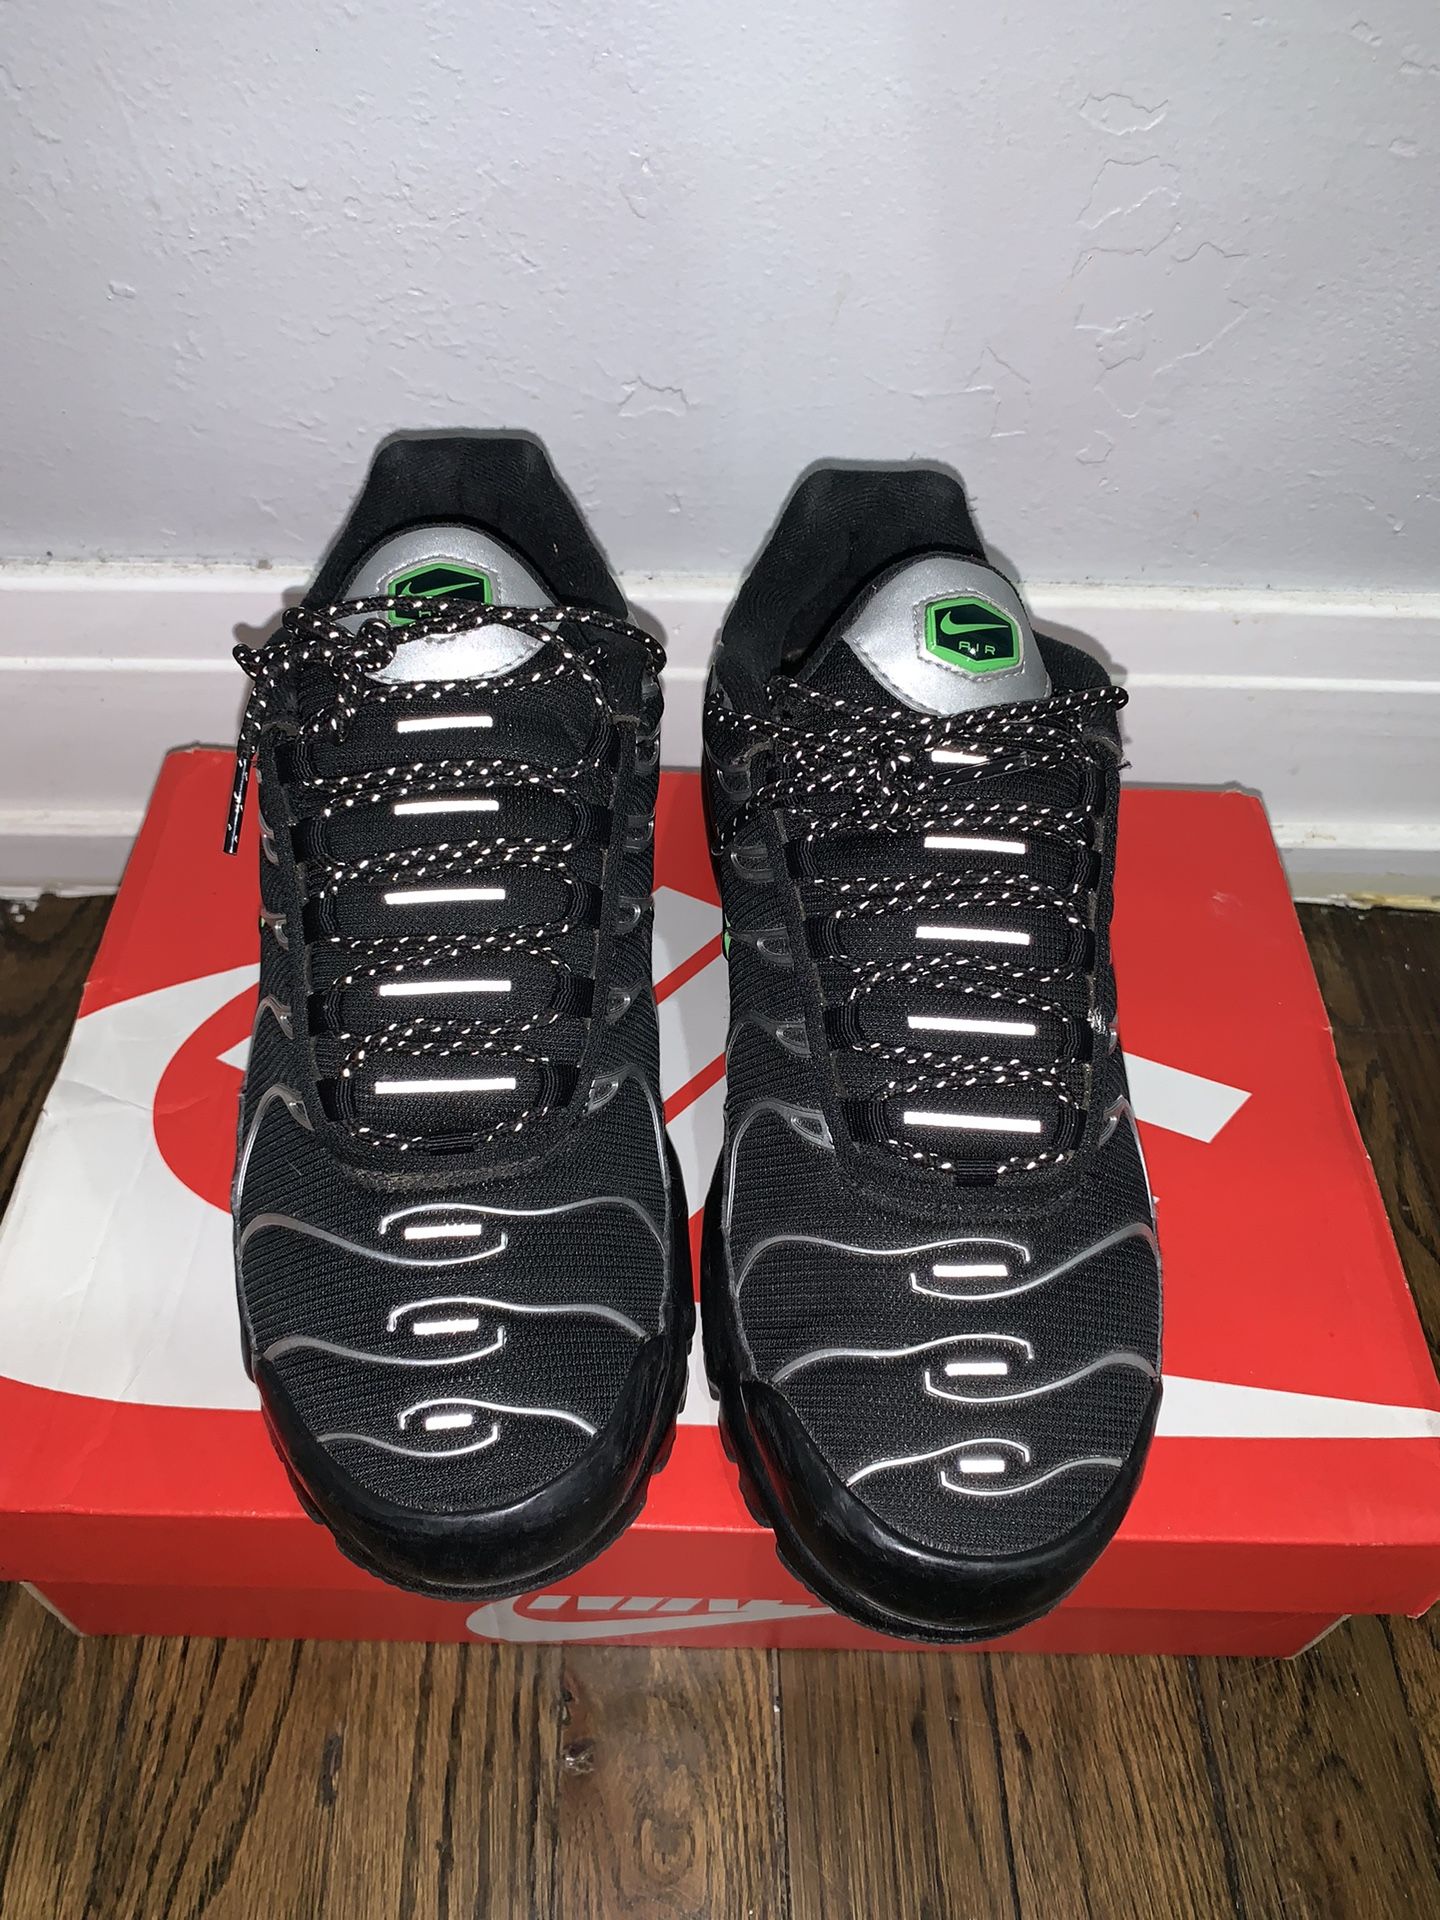 Nike air max black silver green strike Size 9